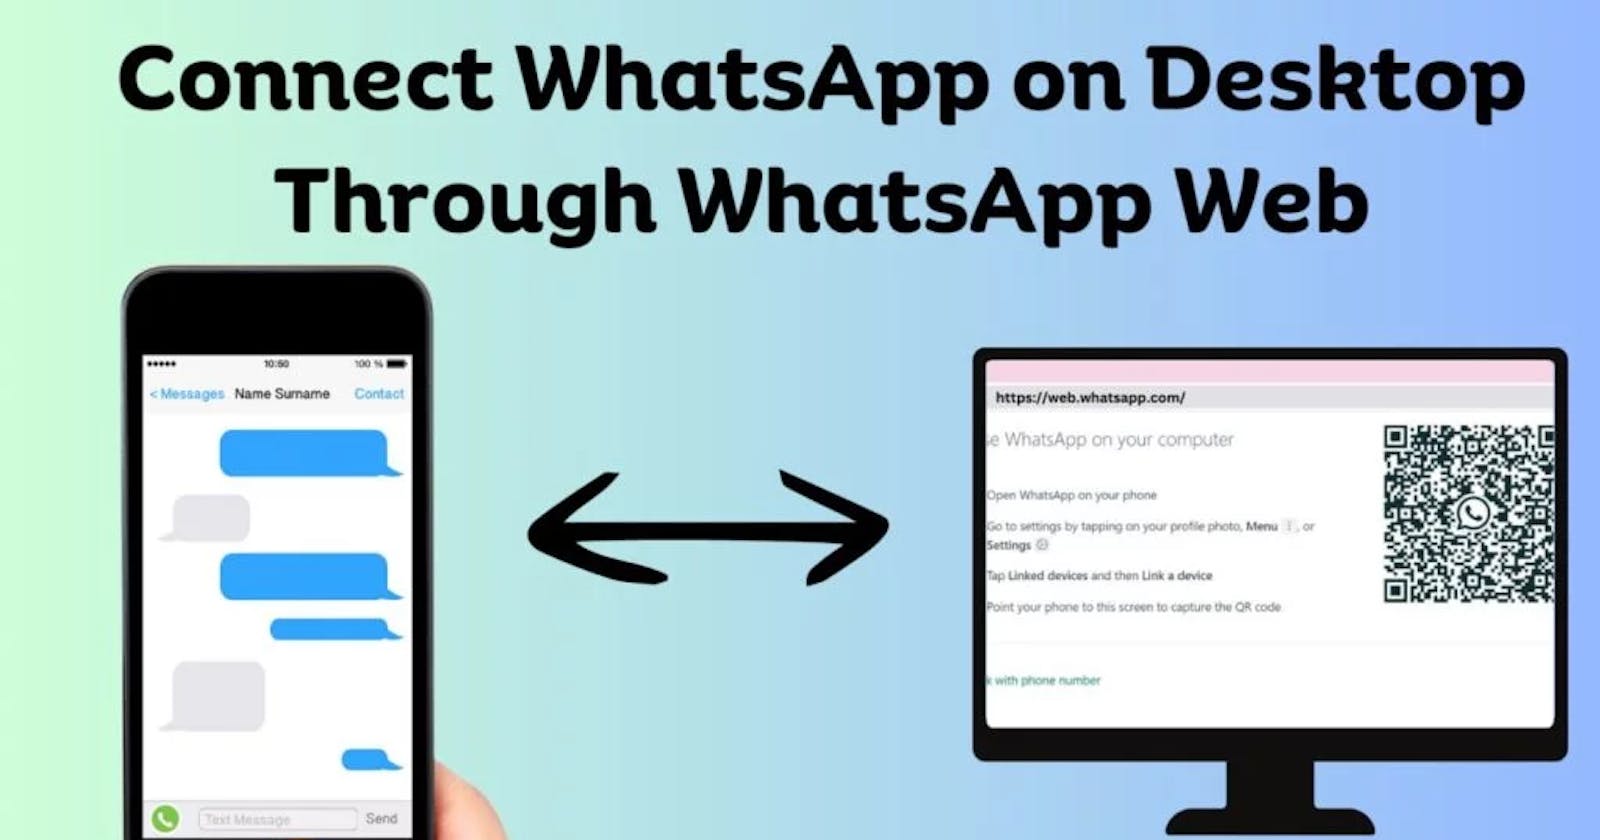 Connect WhatsApp on a Desktop